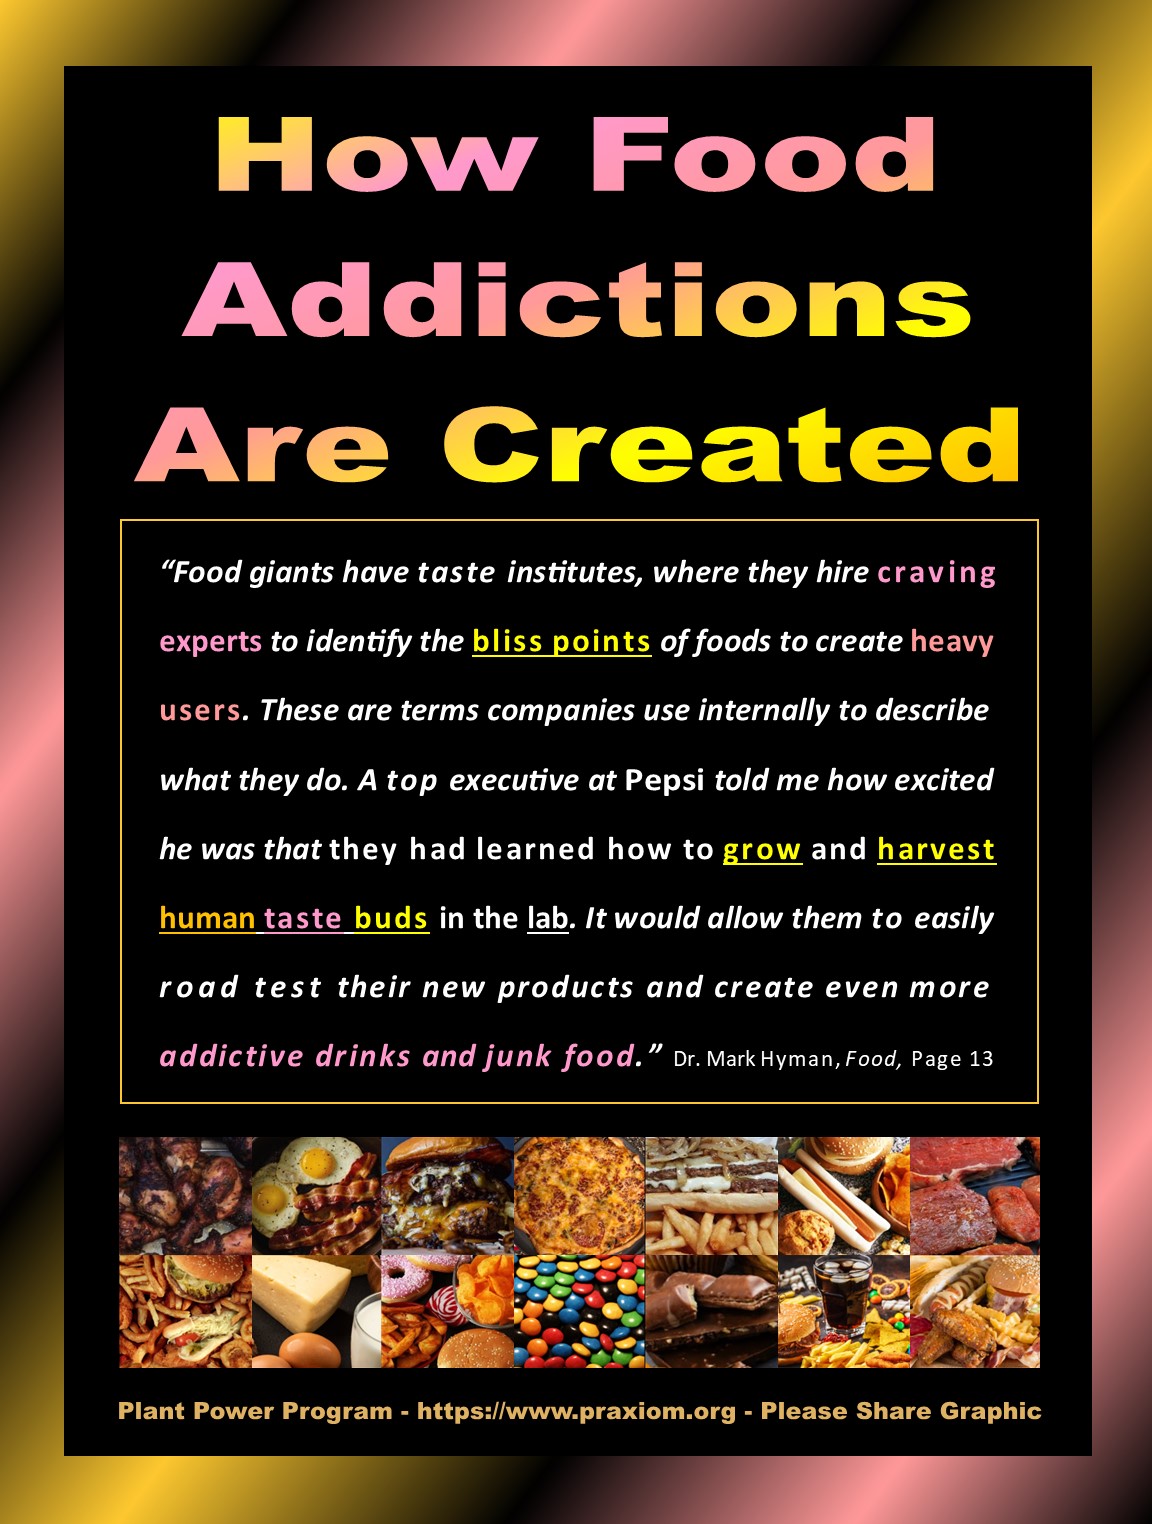 How Food Addictions are Created - Dr. Joel Fuhrman